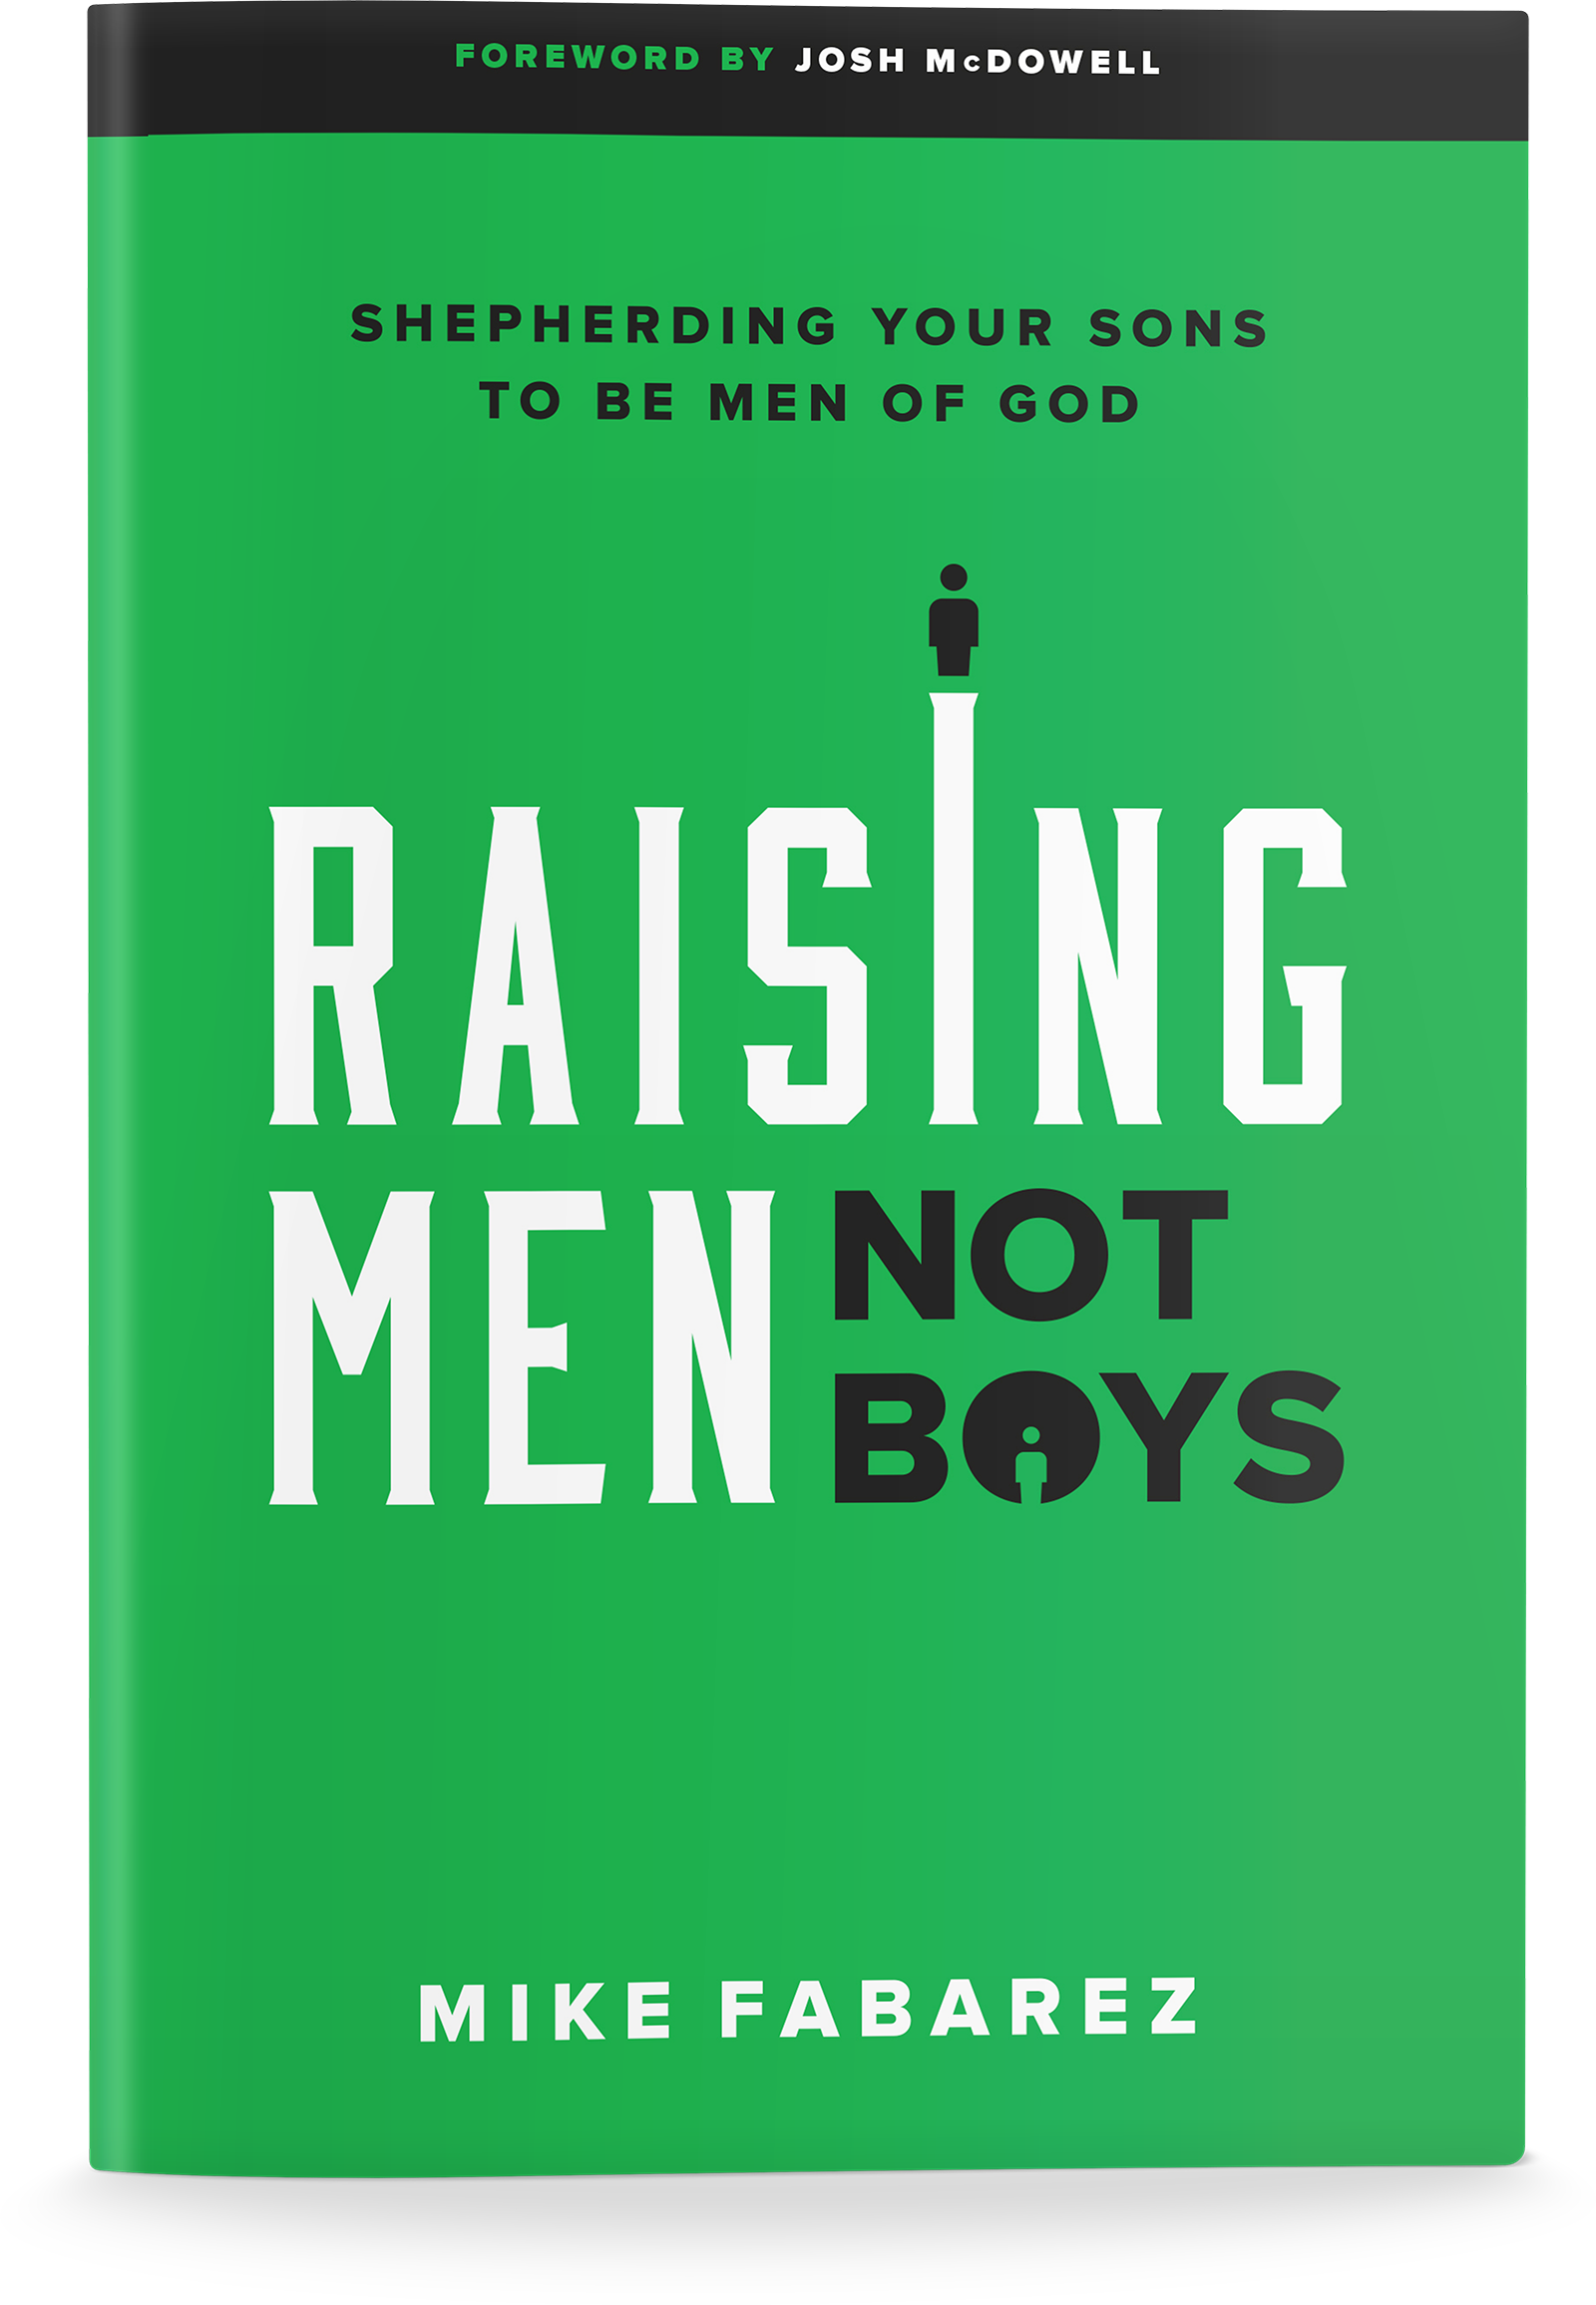 The book, "Raising Men Not Boys" by Mike Fabarez